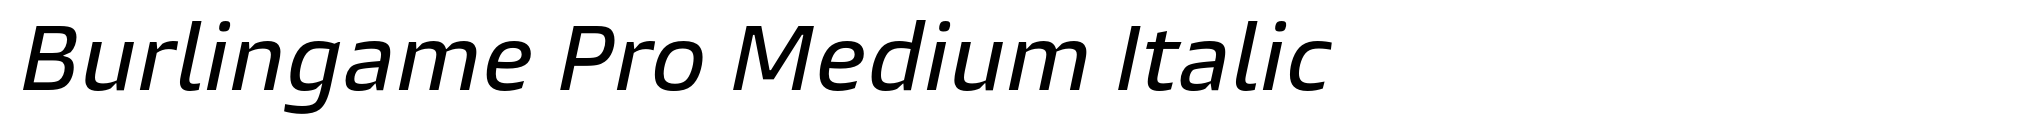 Burlingame Pro Medium Italic image